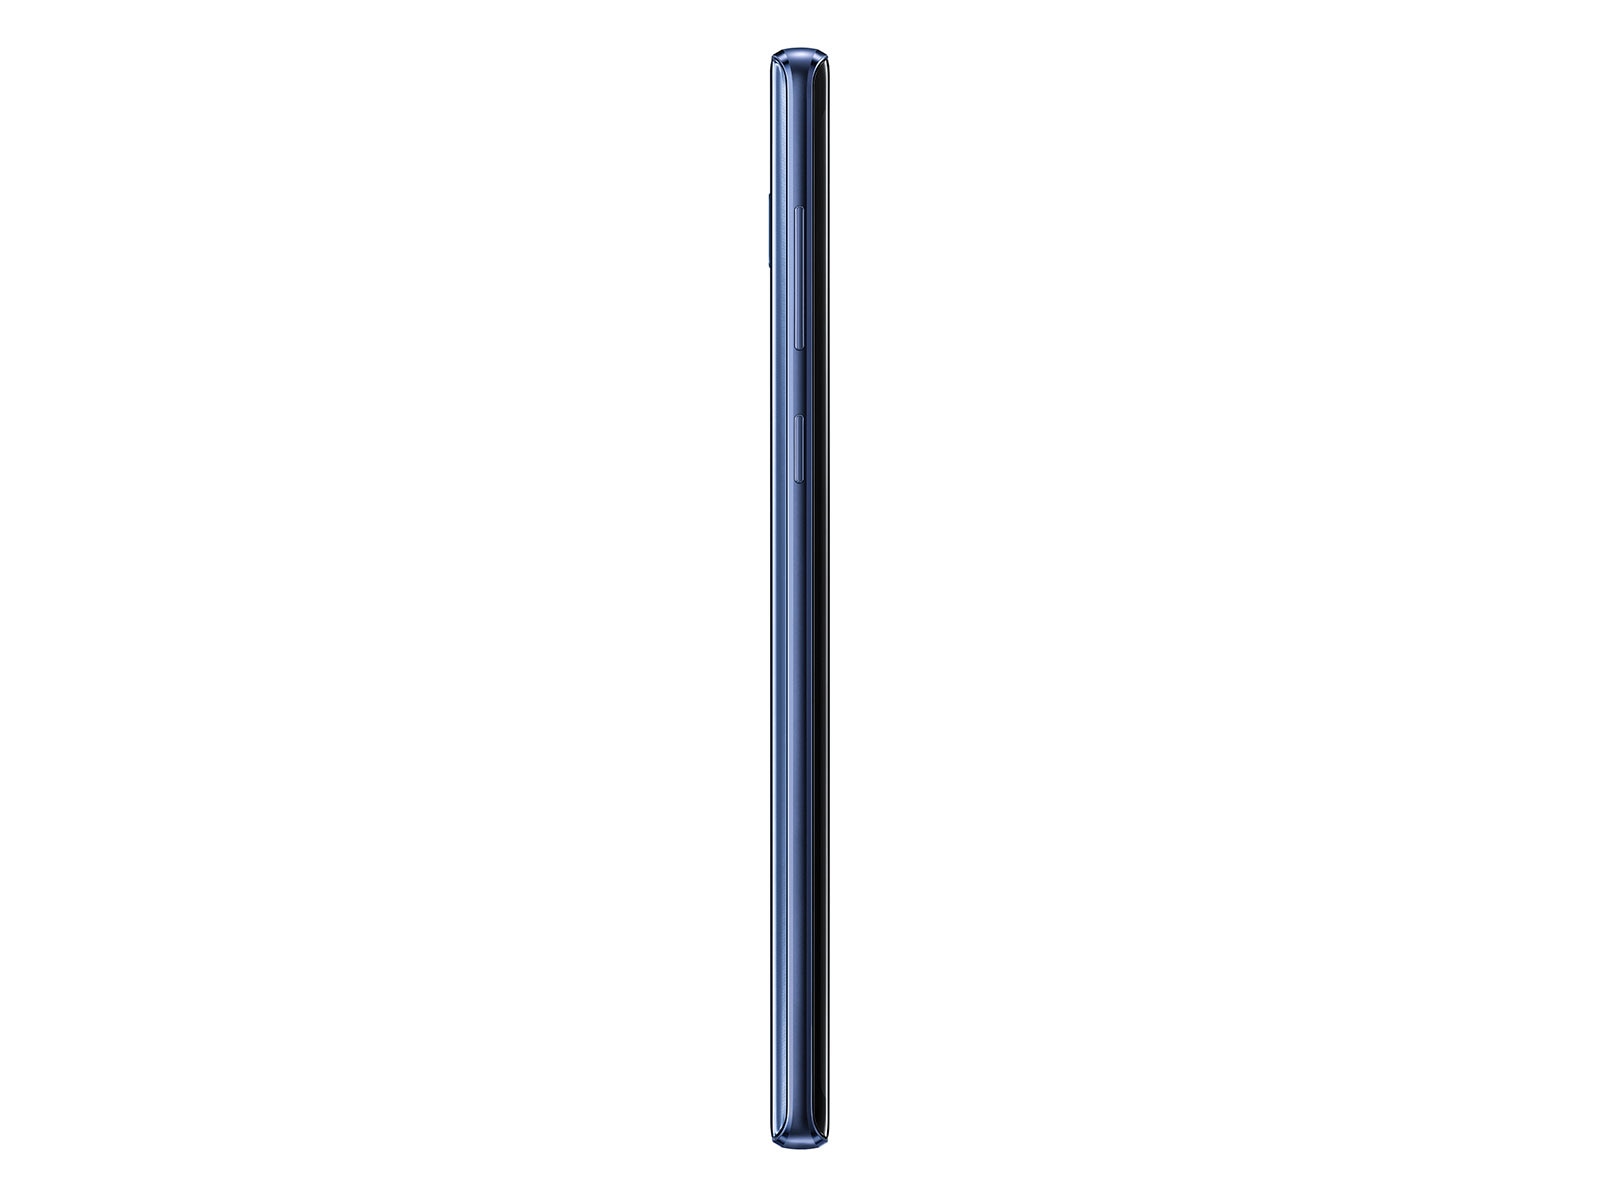 Thumbnail image of Galaxy Note9 128GB (Unlocked)